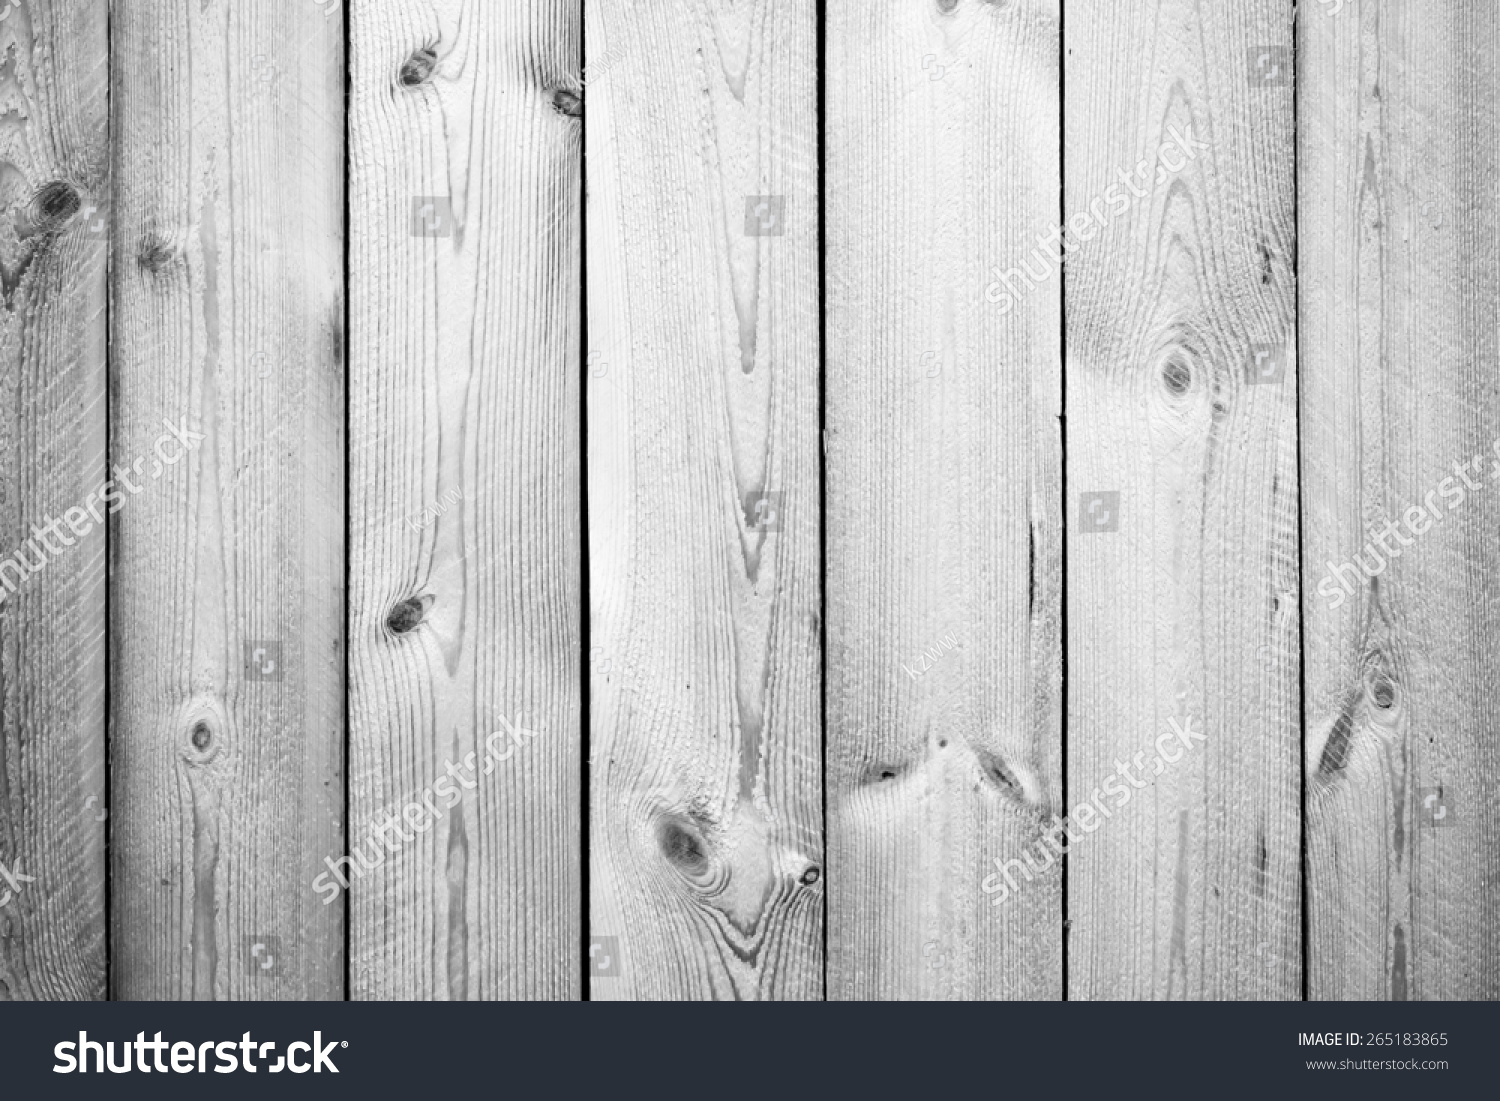 Wood texture barn board black and white photo #265183865